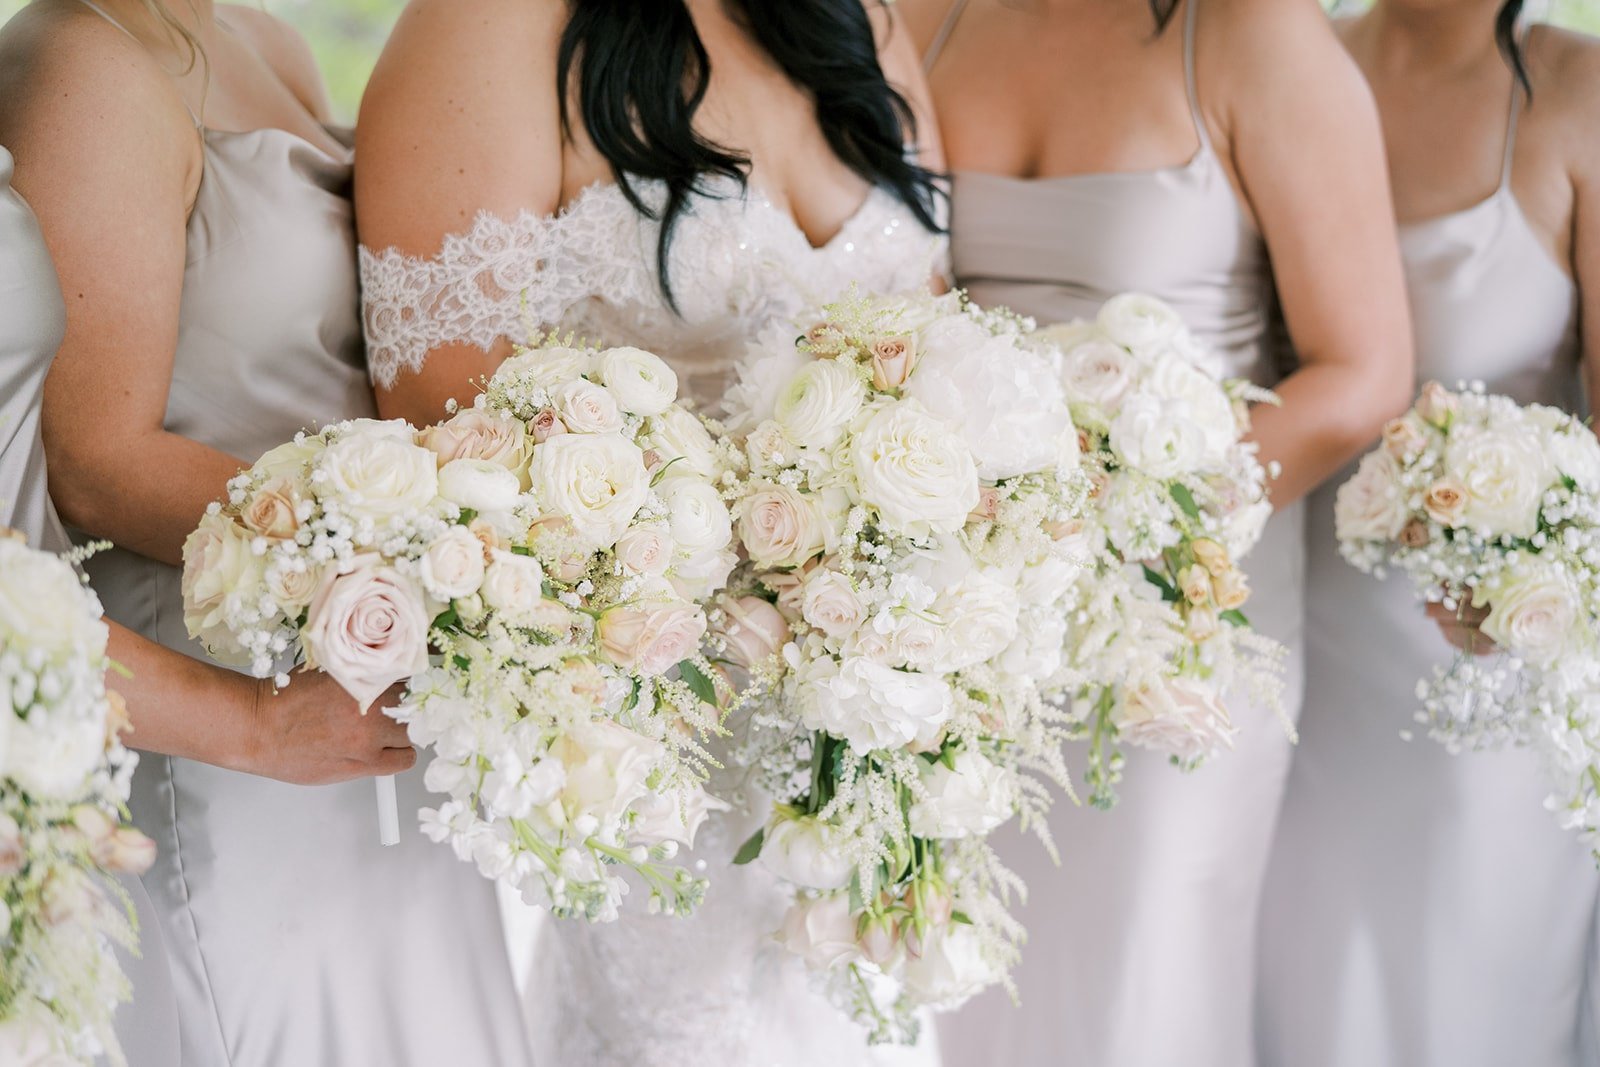 nashville wedding florist - all white wedding flowers 4.jpg